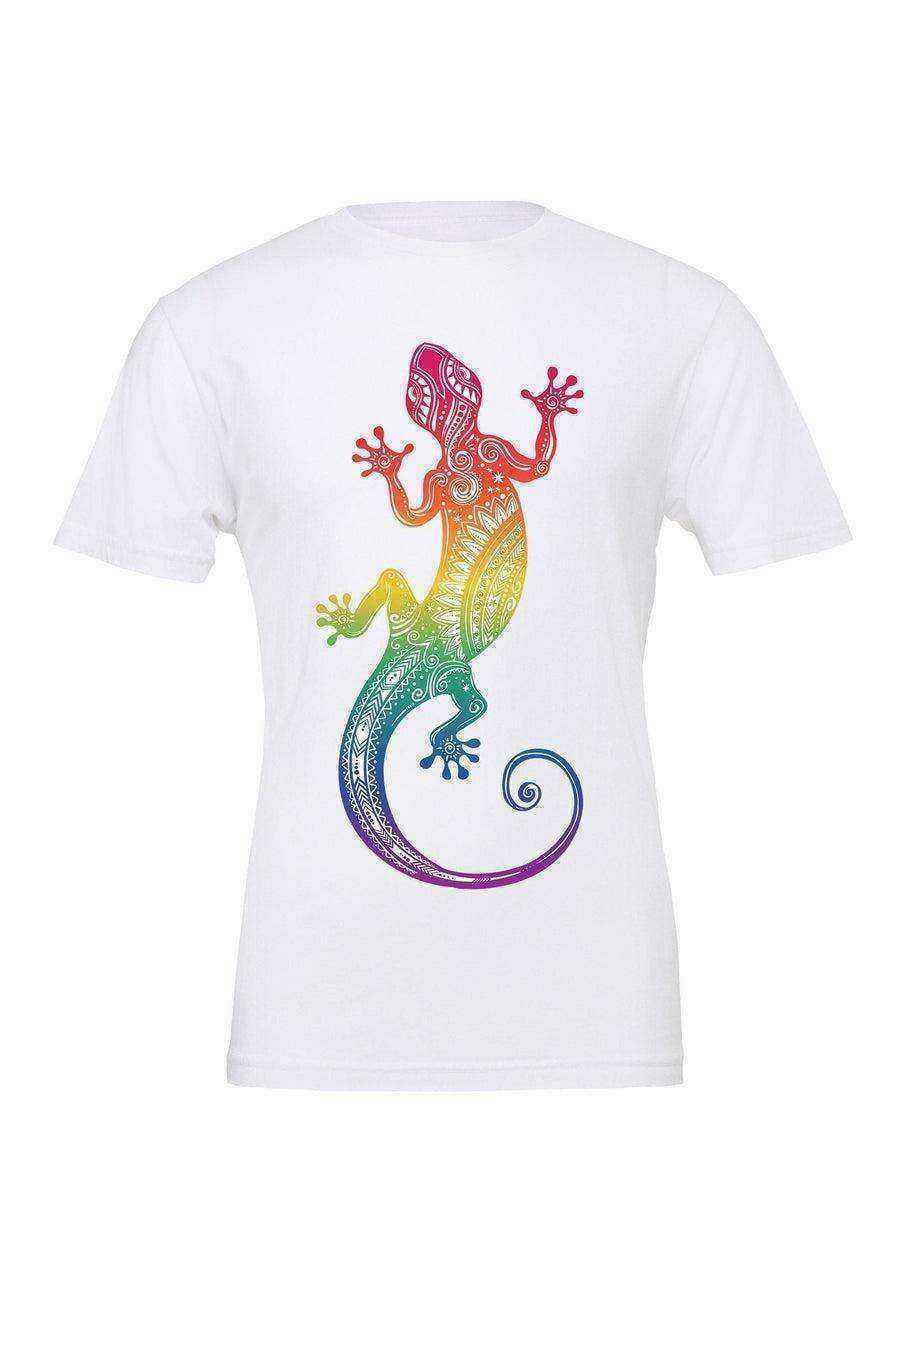 Rainbow Lizard Shirt | Rainbow Print - Dylan's Tees